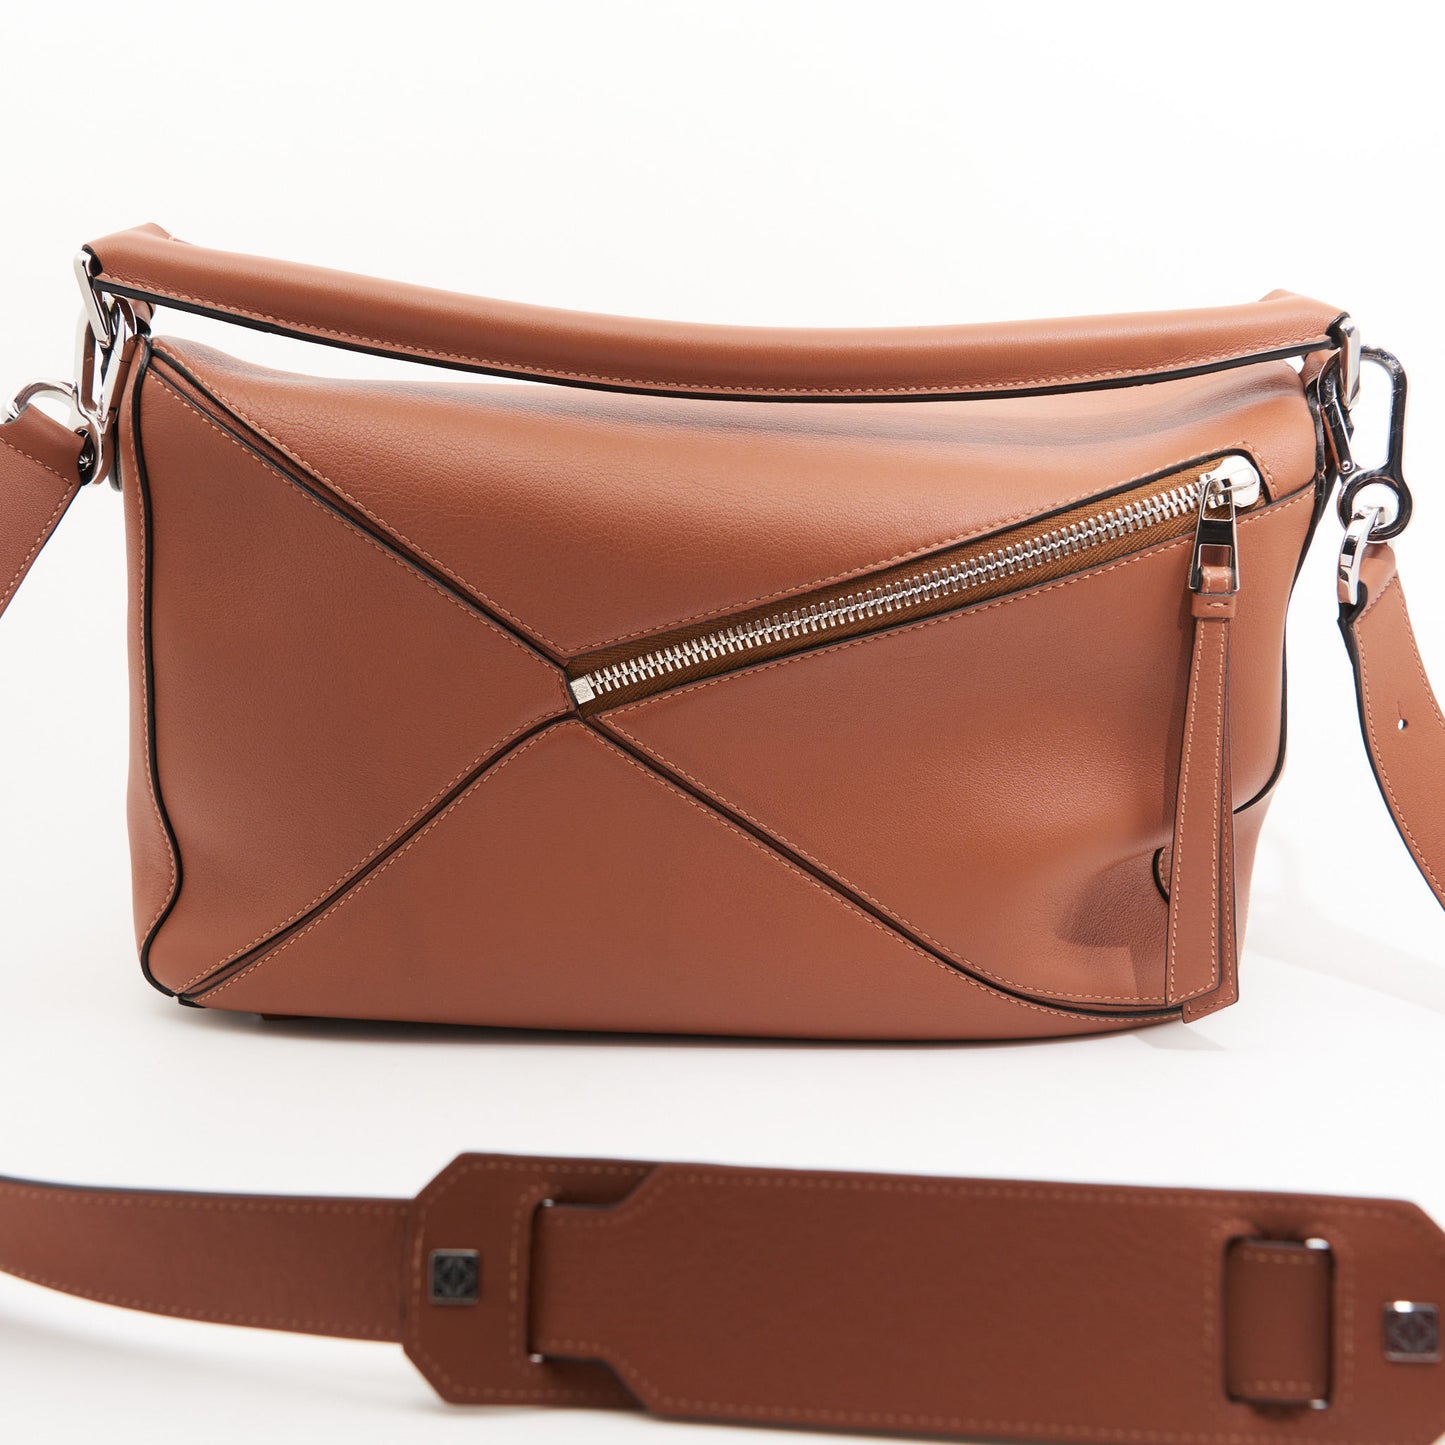 Loewe Leather Puzzle Bag in Tan